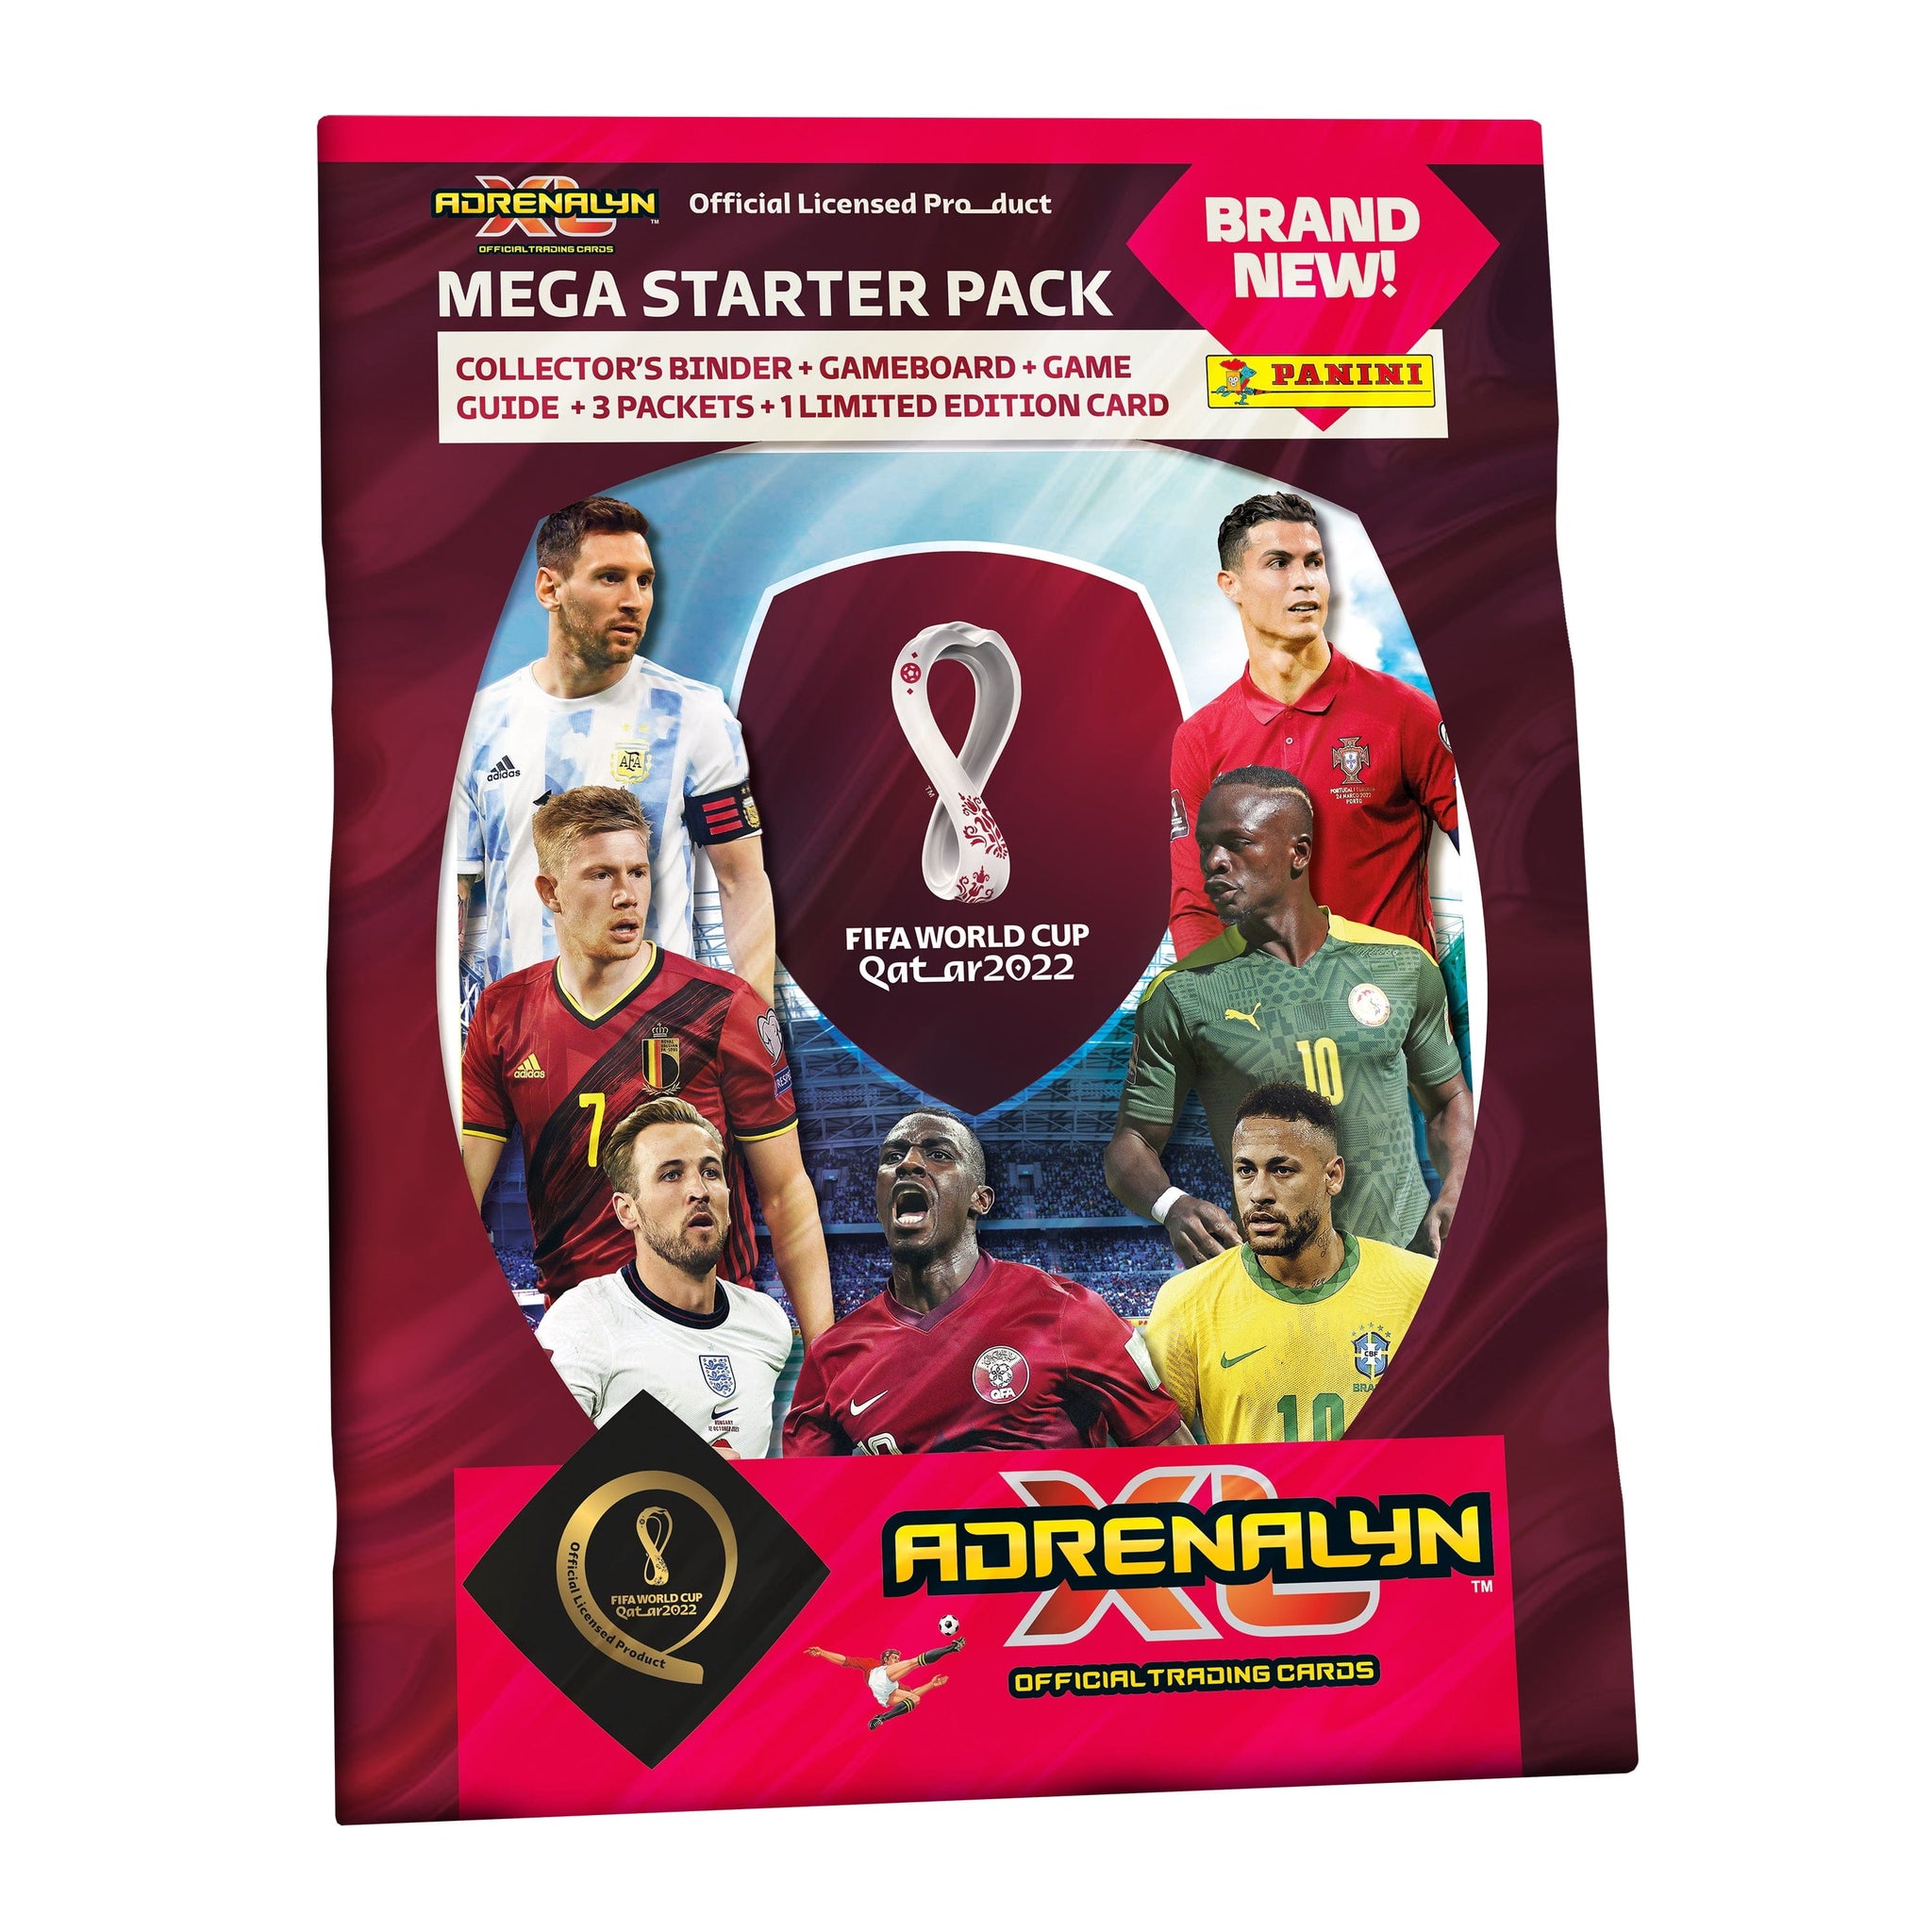 Panini Premier League 2022/23 Adrenalyn XL Starter Pack